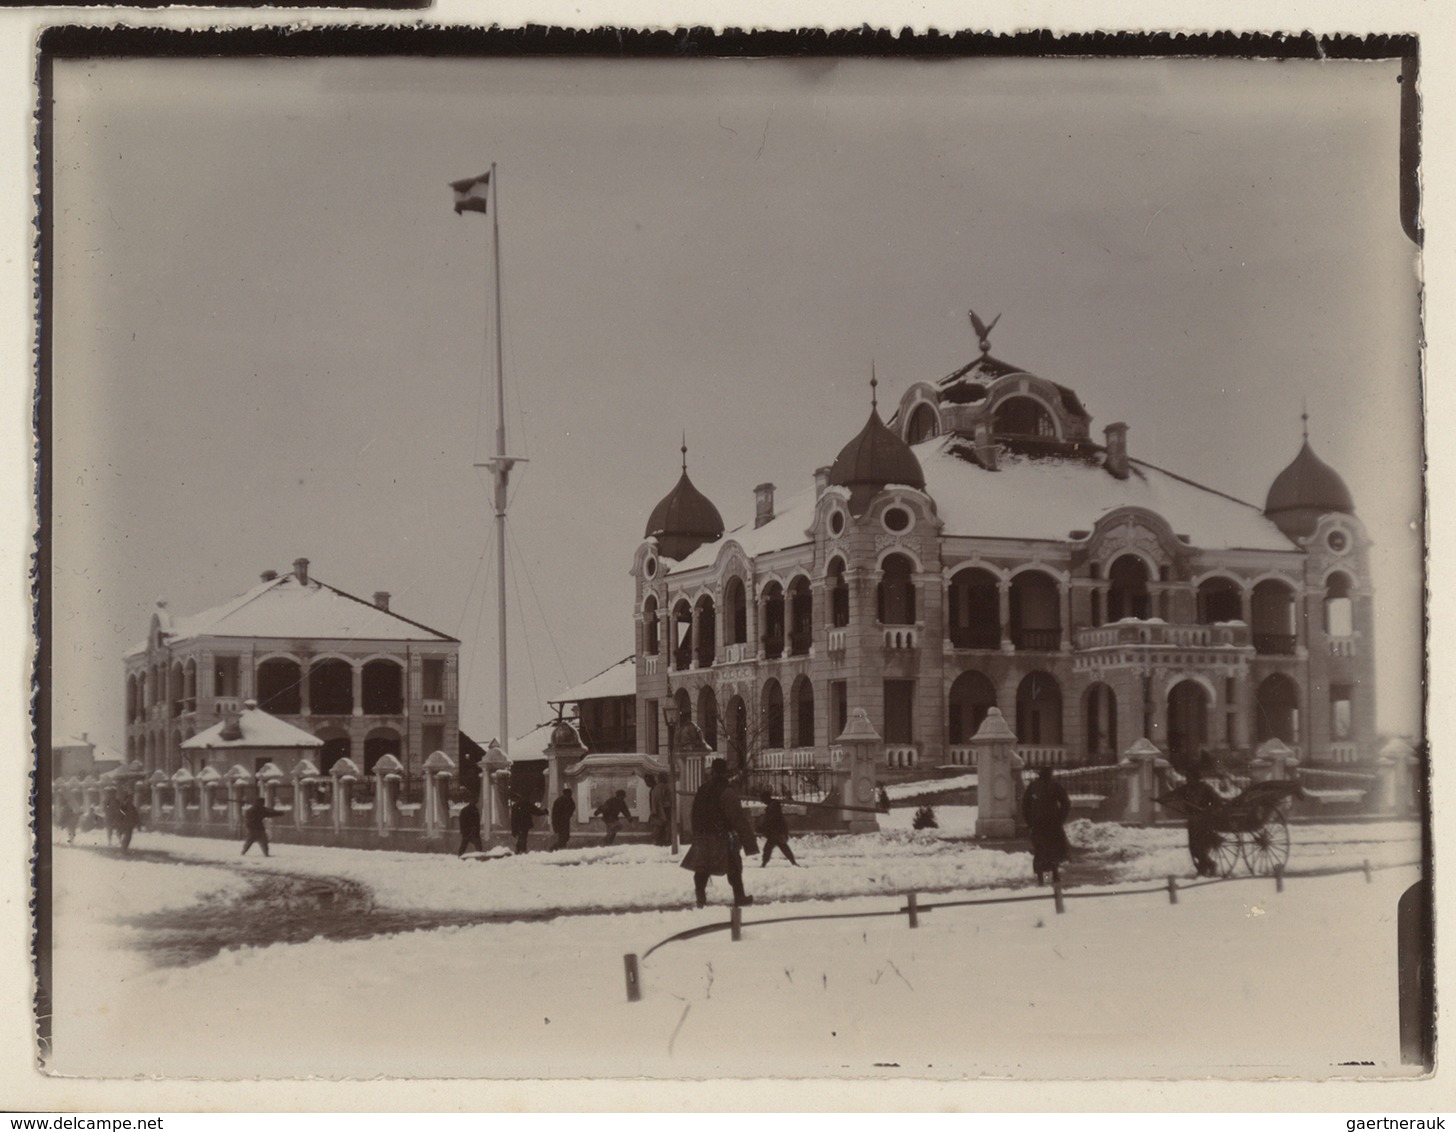 China - Besonderheiten: 1906, May: Hankow, ca. 60 photographs on pages prepared by "Konrad Glatter,